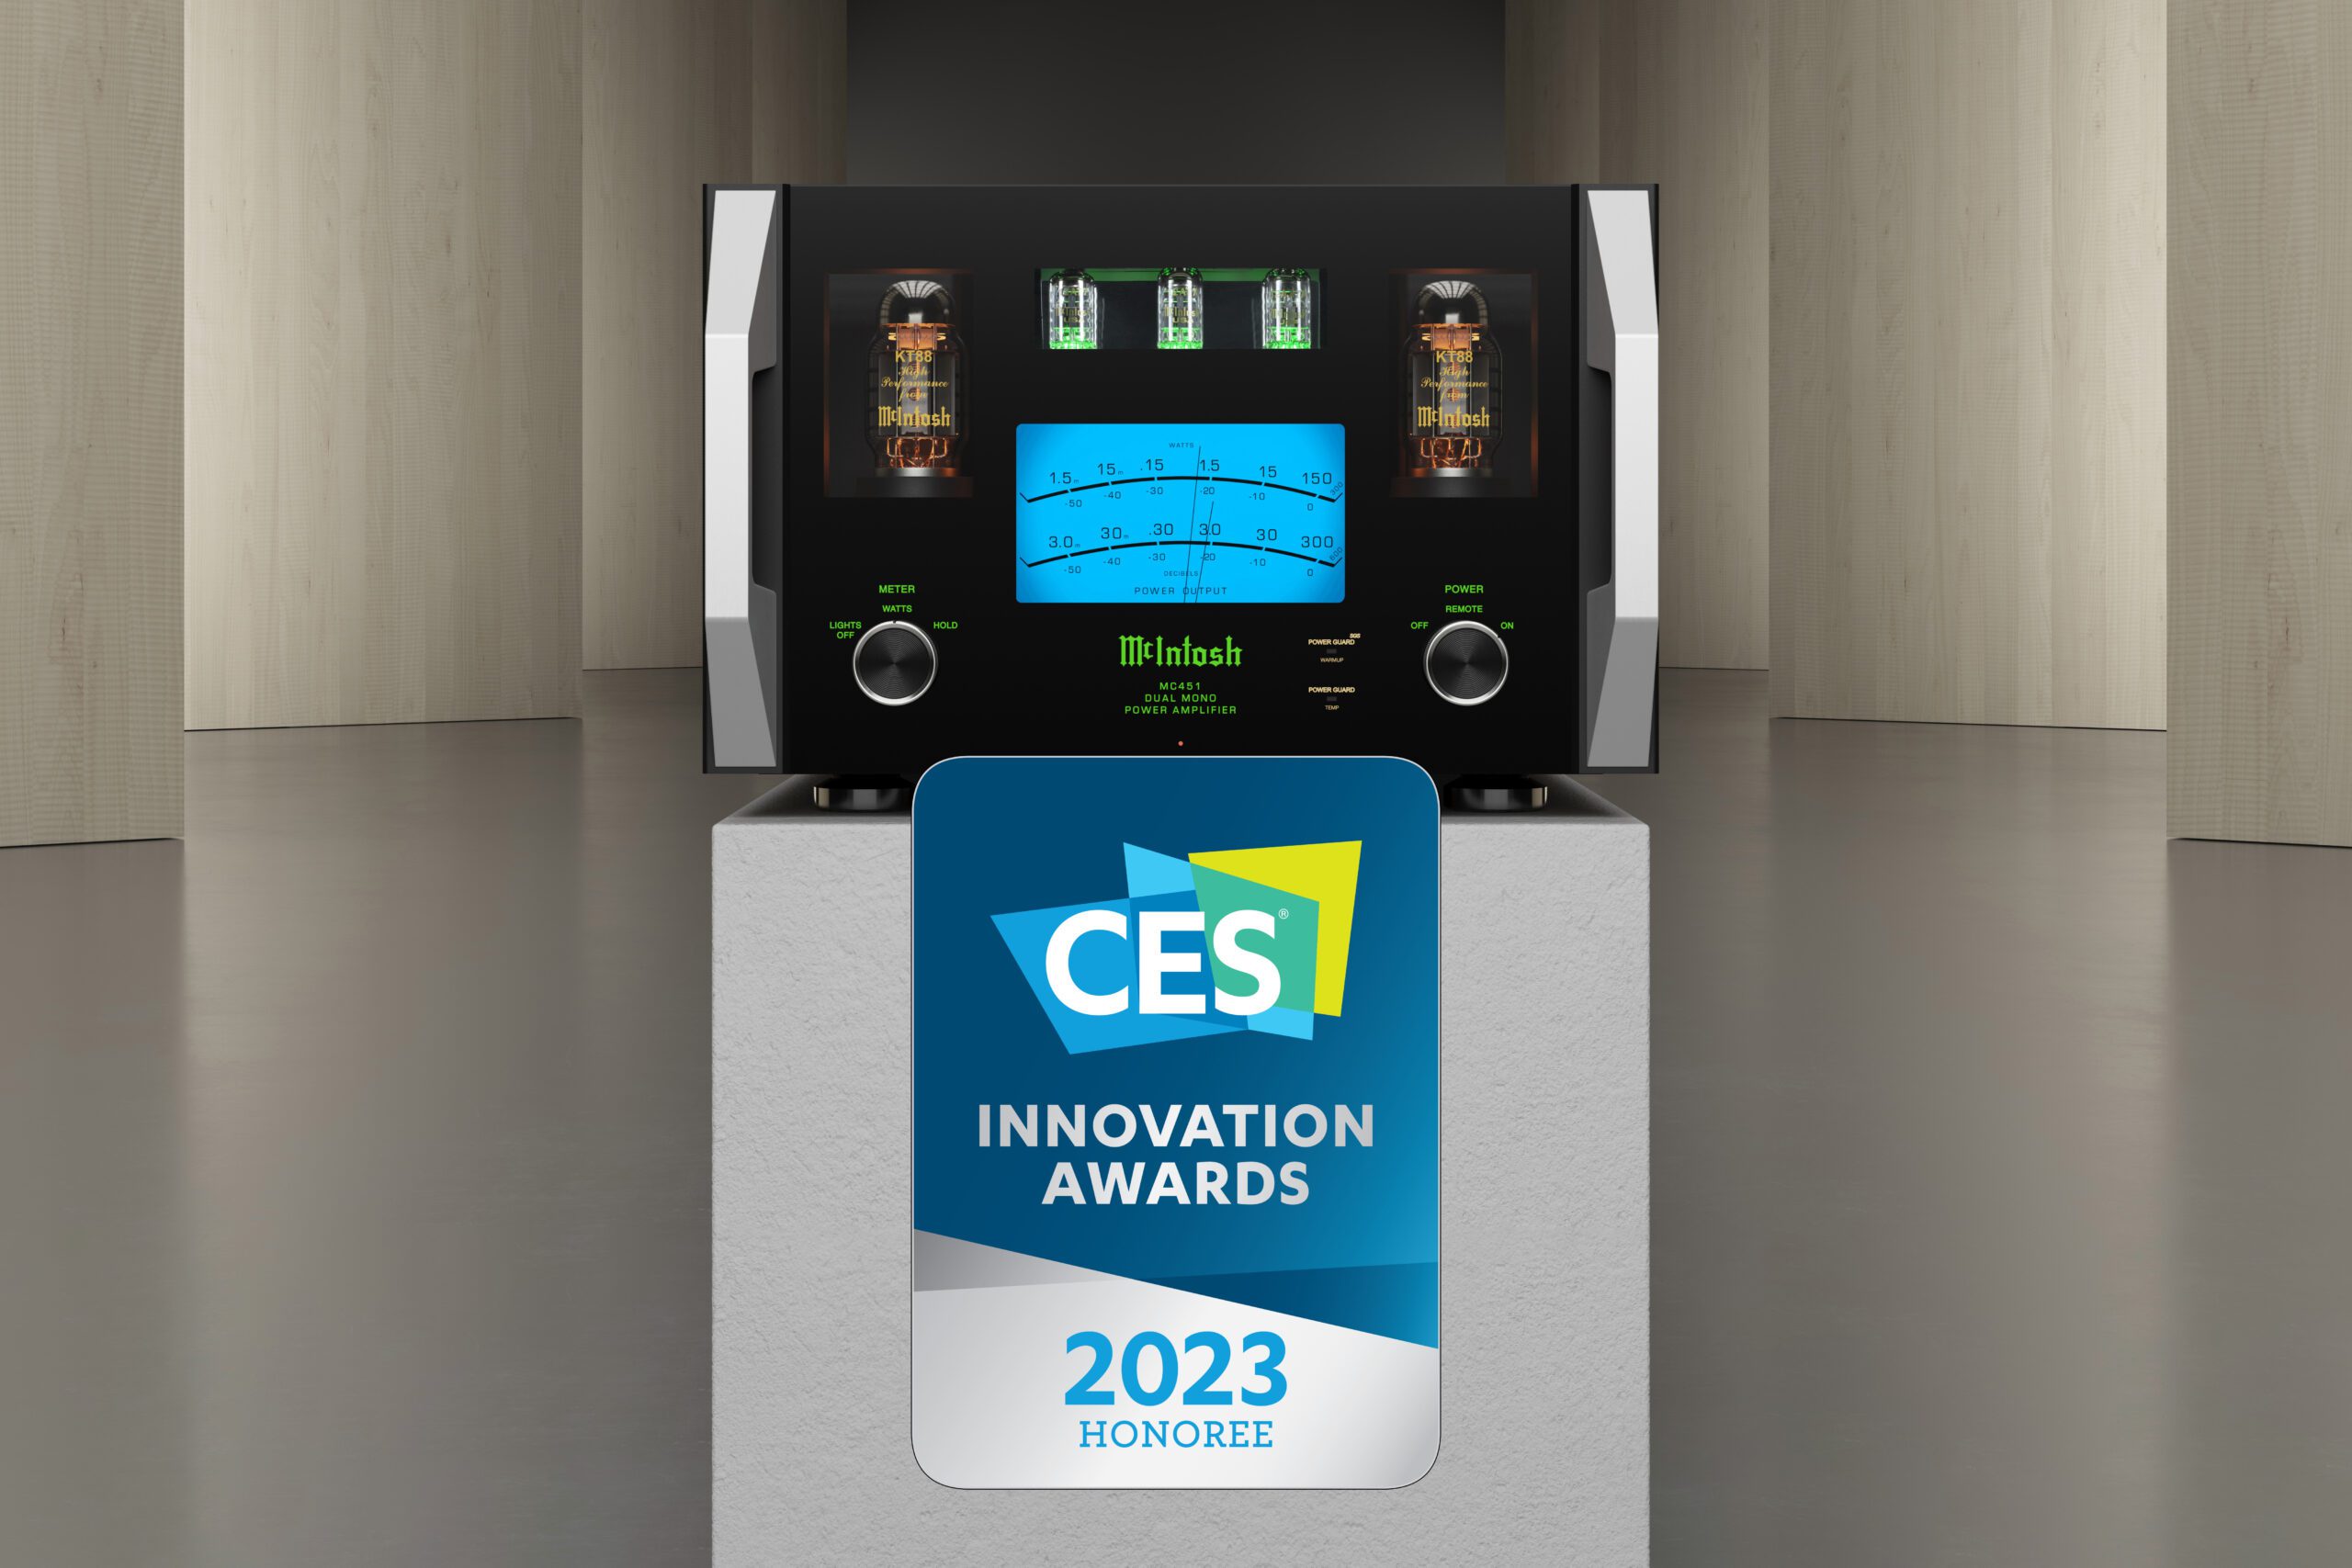 McIntosh MC45 is a CES Innovation Awards 2023 honoree hifi+